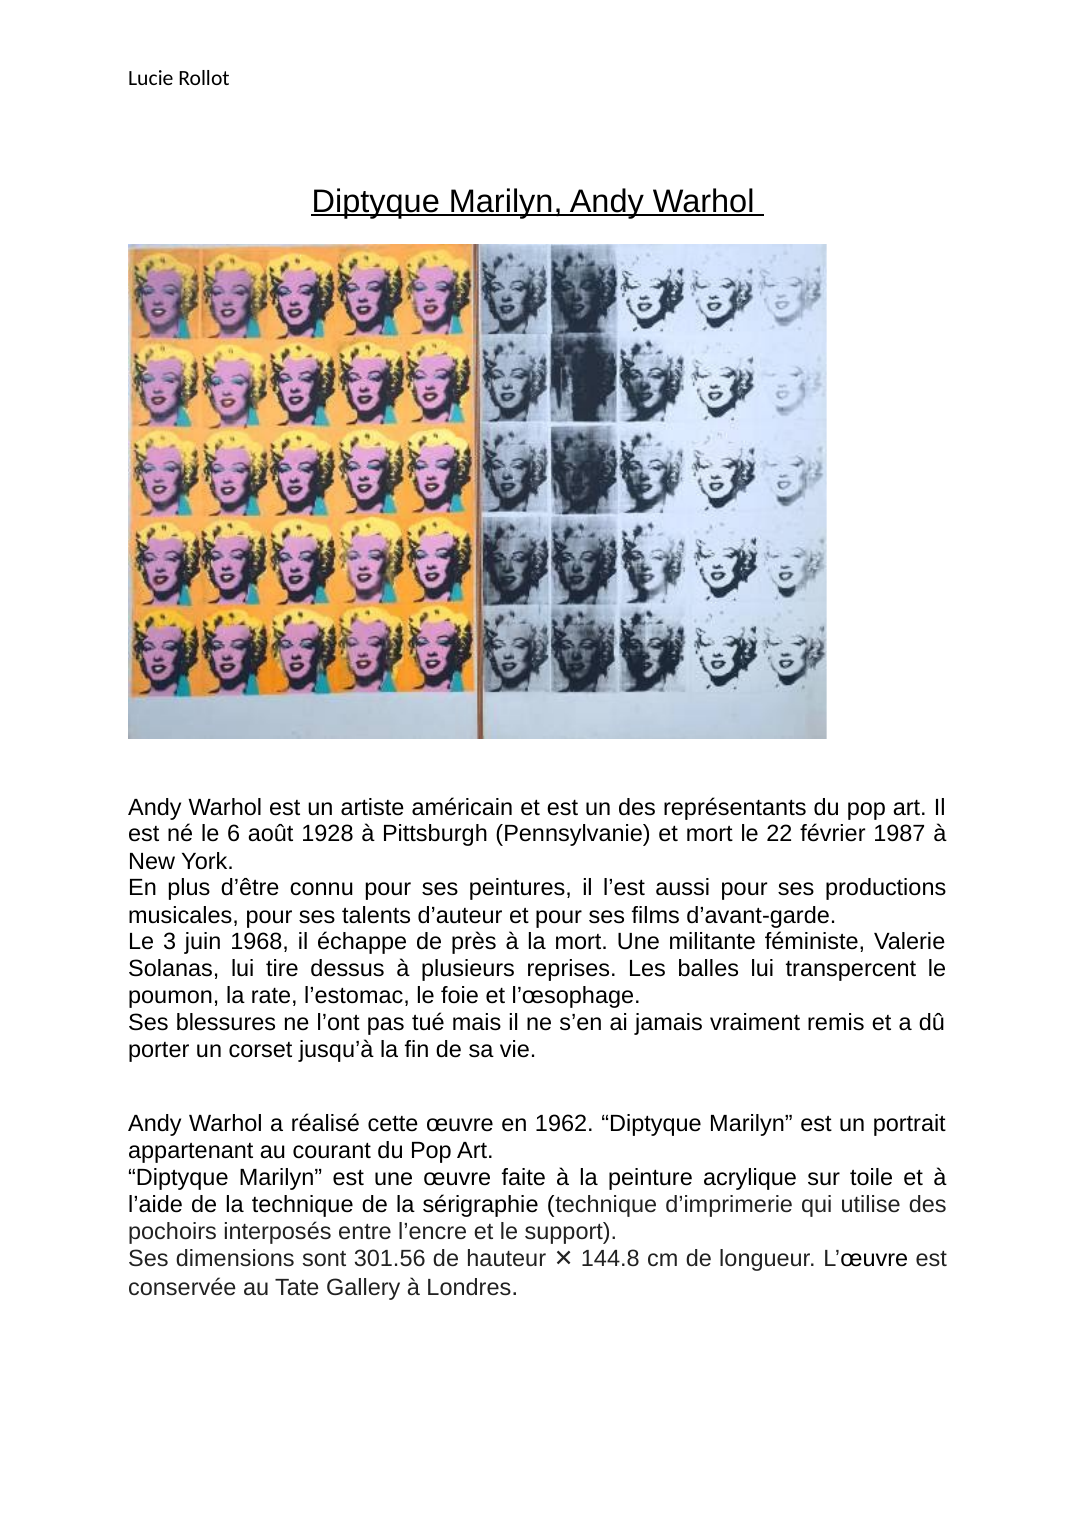 Prévisualisation du document Exposé: Diptyque Marilyn, Andy Warhol